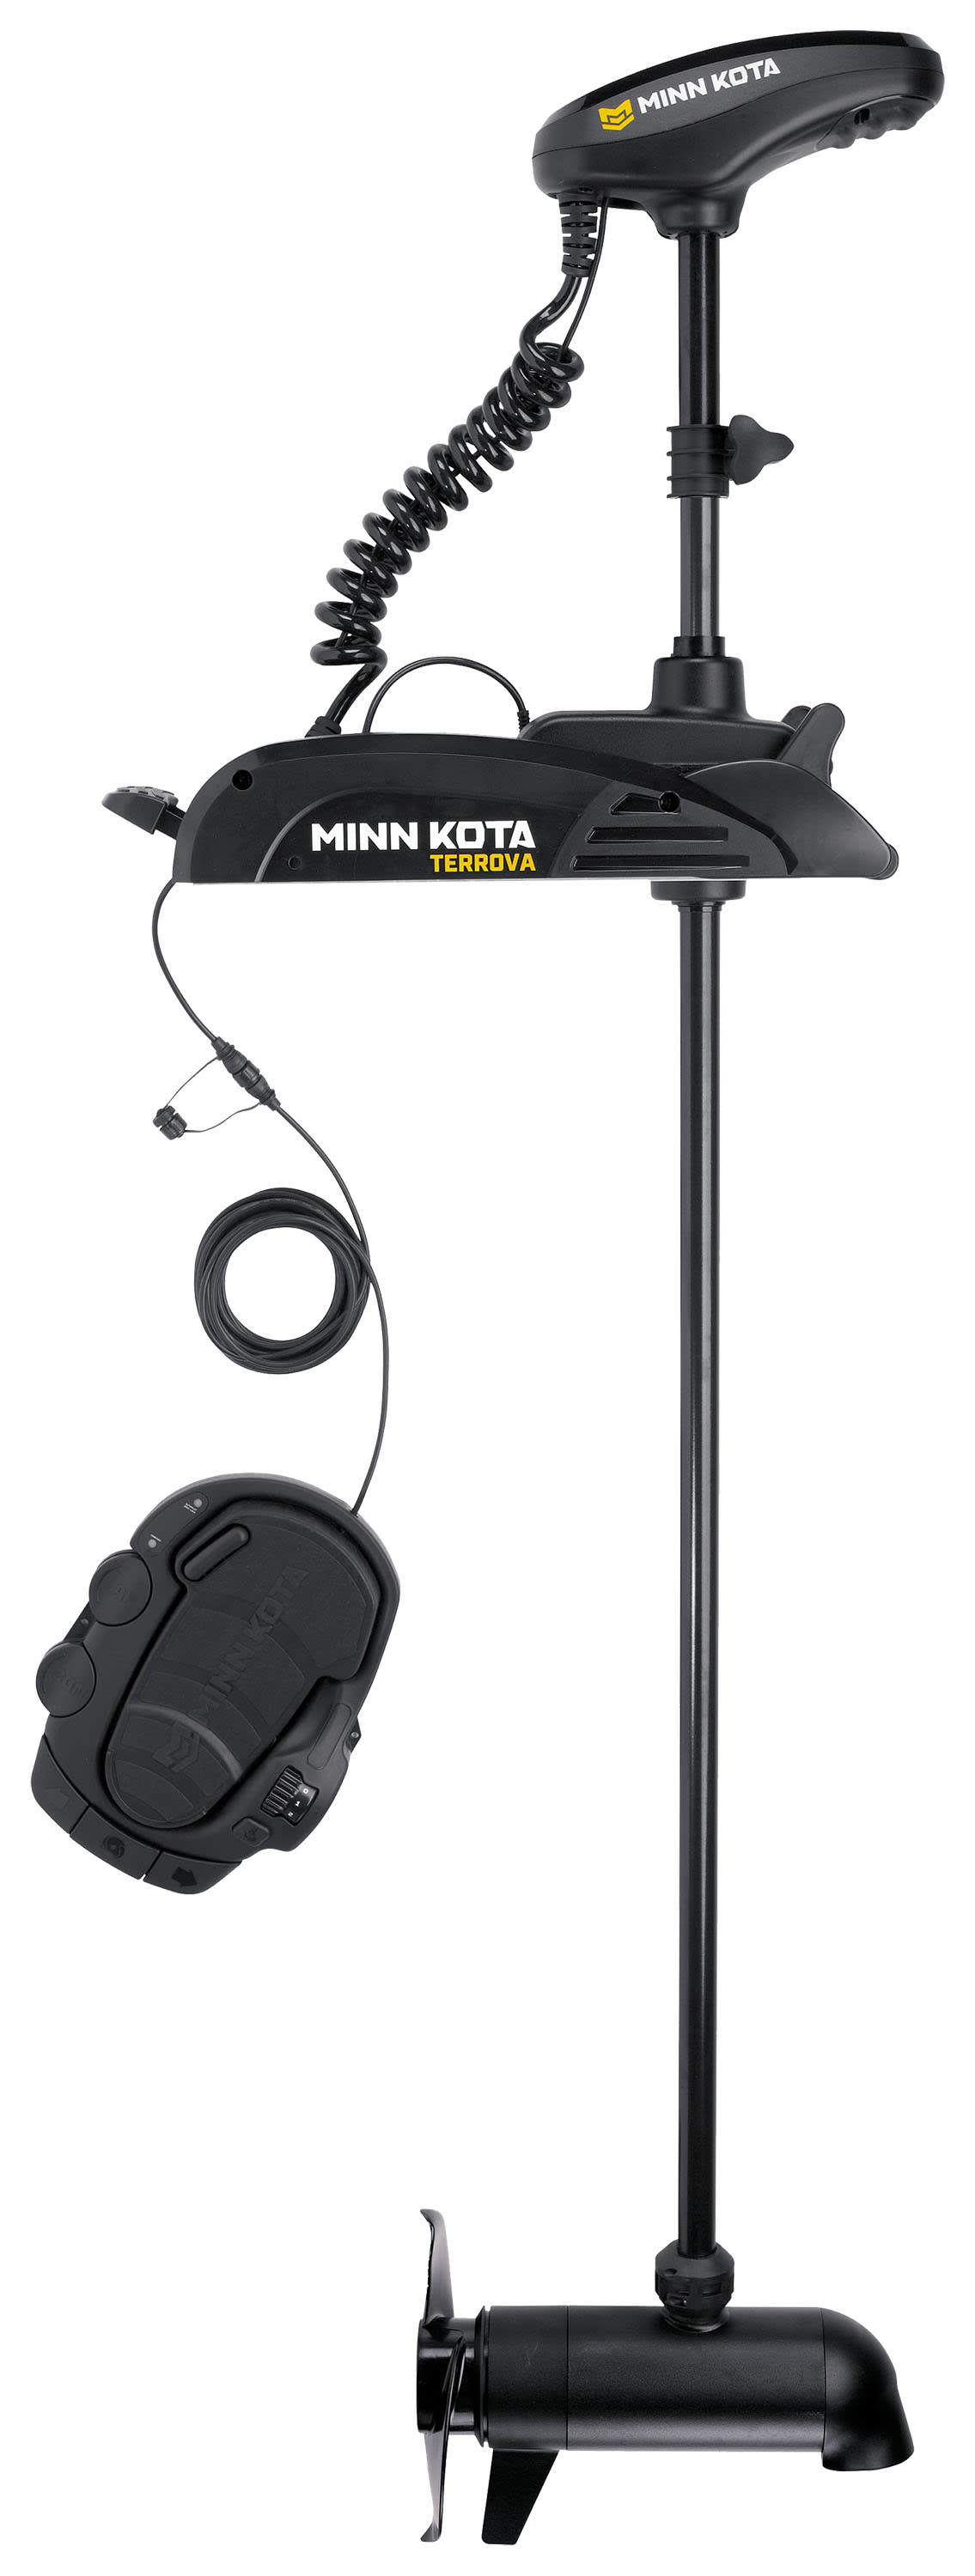 Minn Kota® Terrova® 112lb 72" Freshwater Trolling Motor w/Dual Spectrum CHIRP Sonar and Wireless Remote